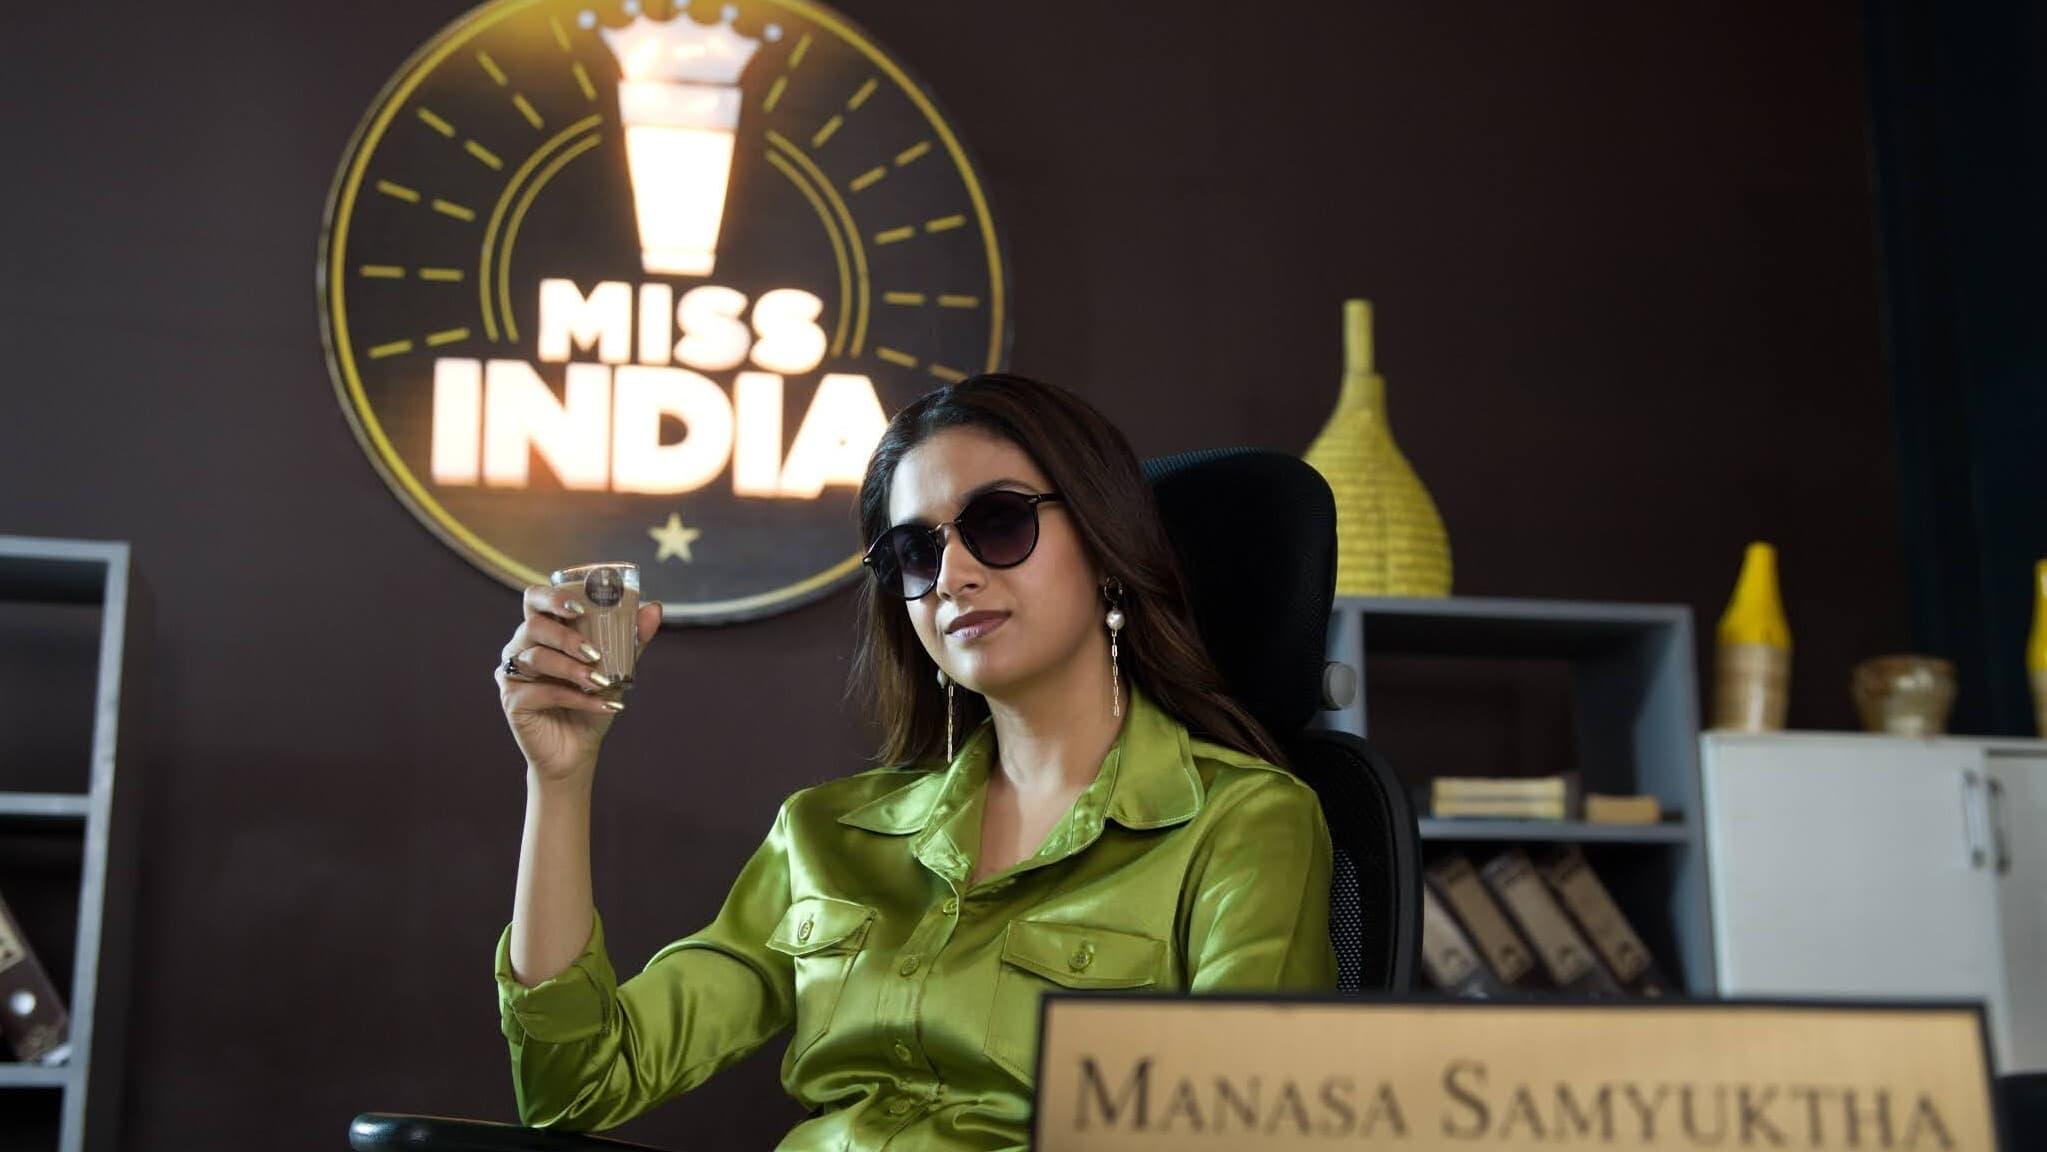 Miss India backdrop